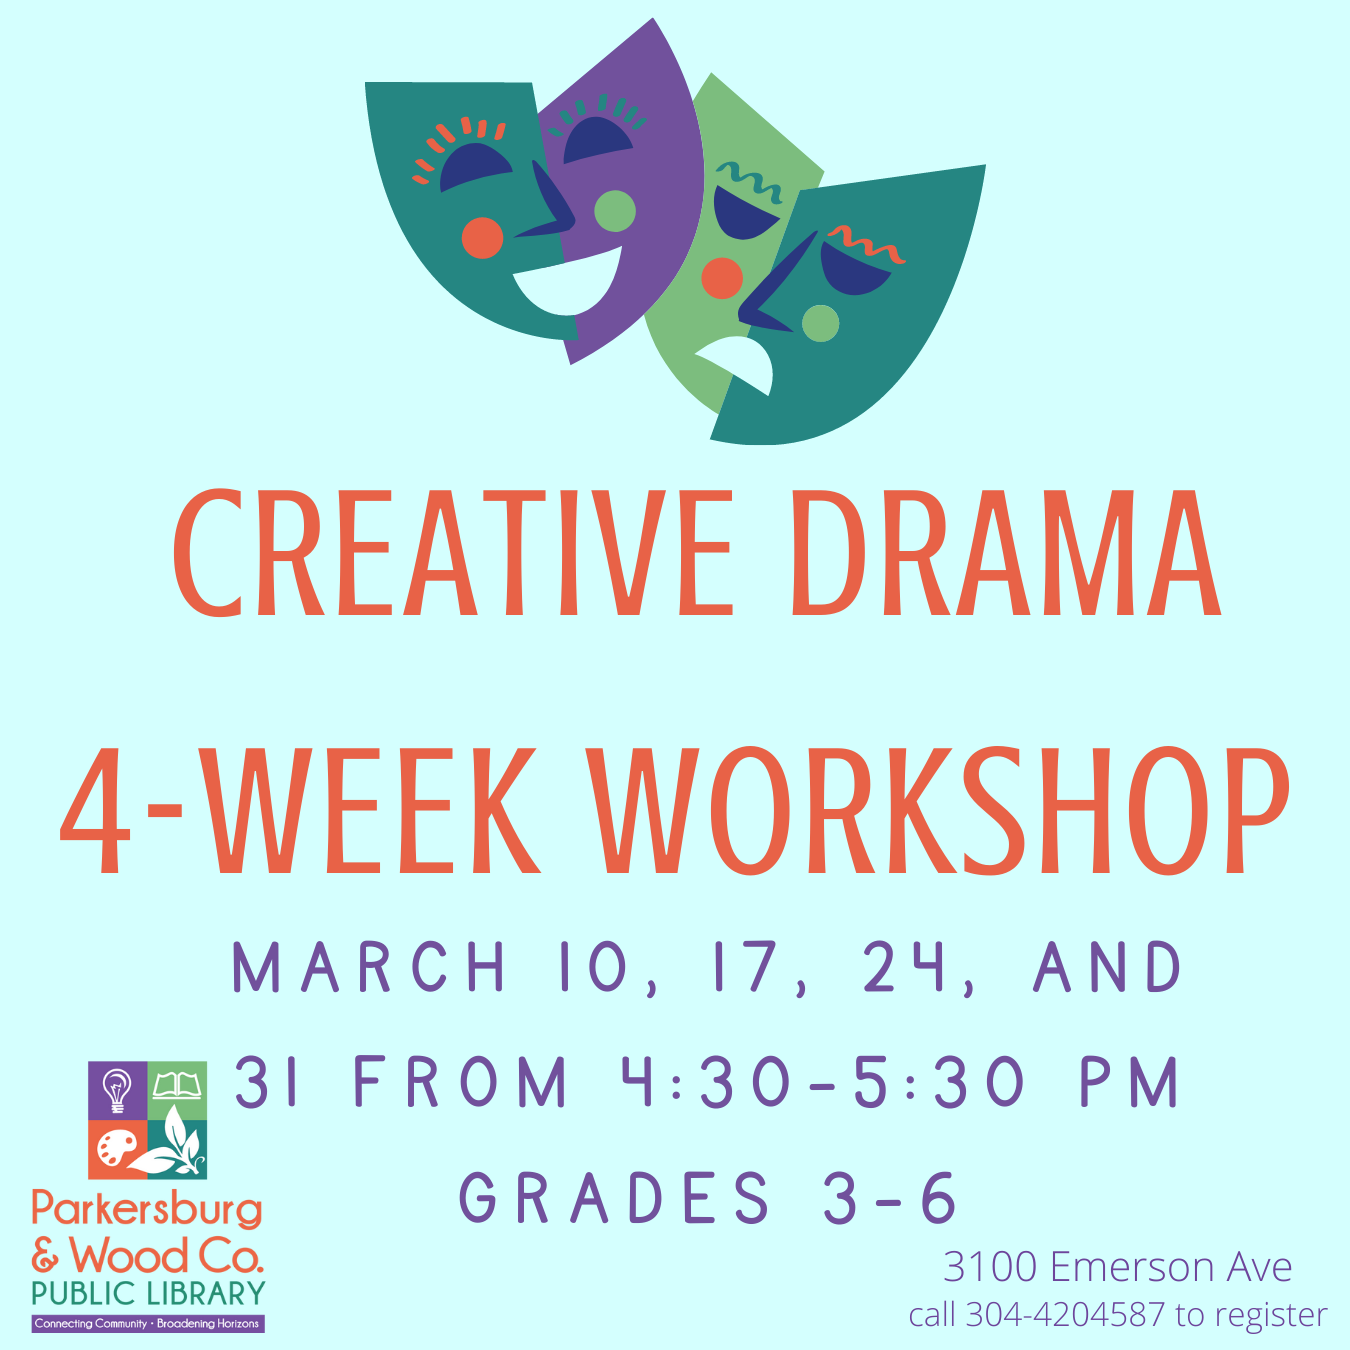 Creative Drama 4-Week Workshop at Emerson